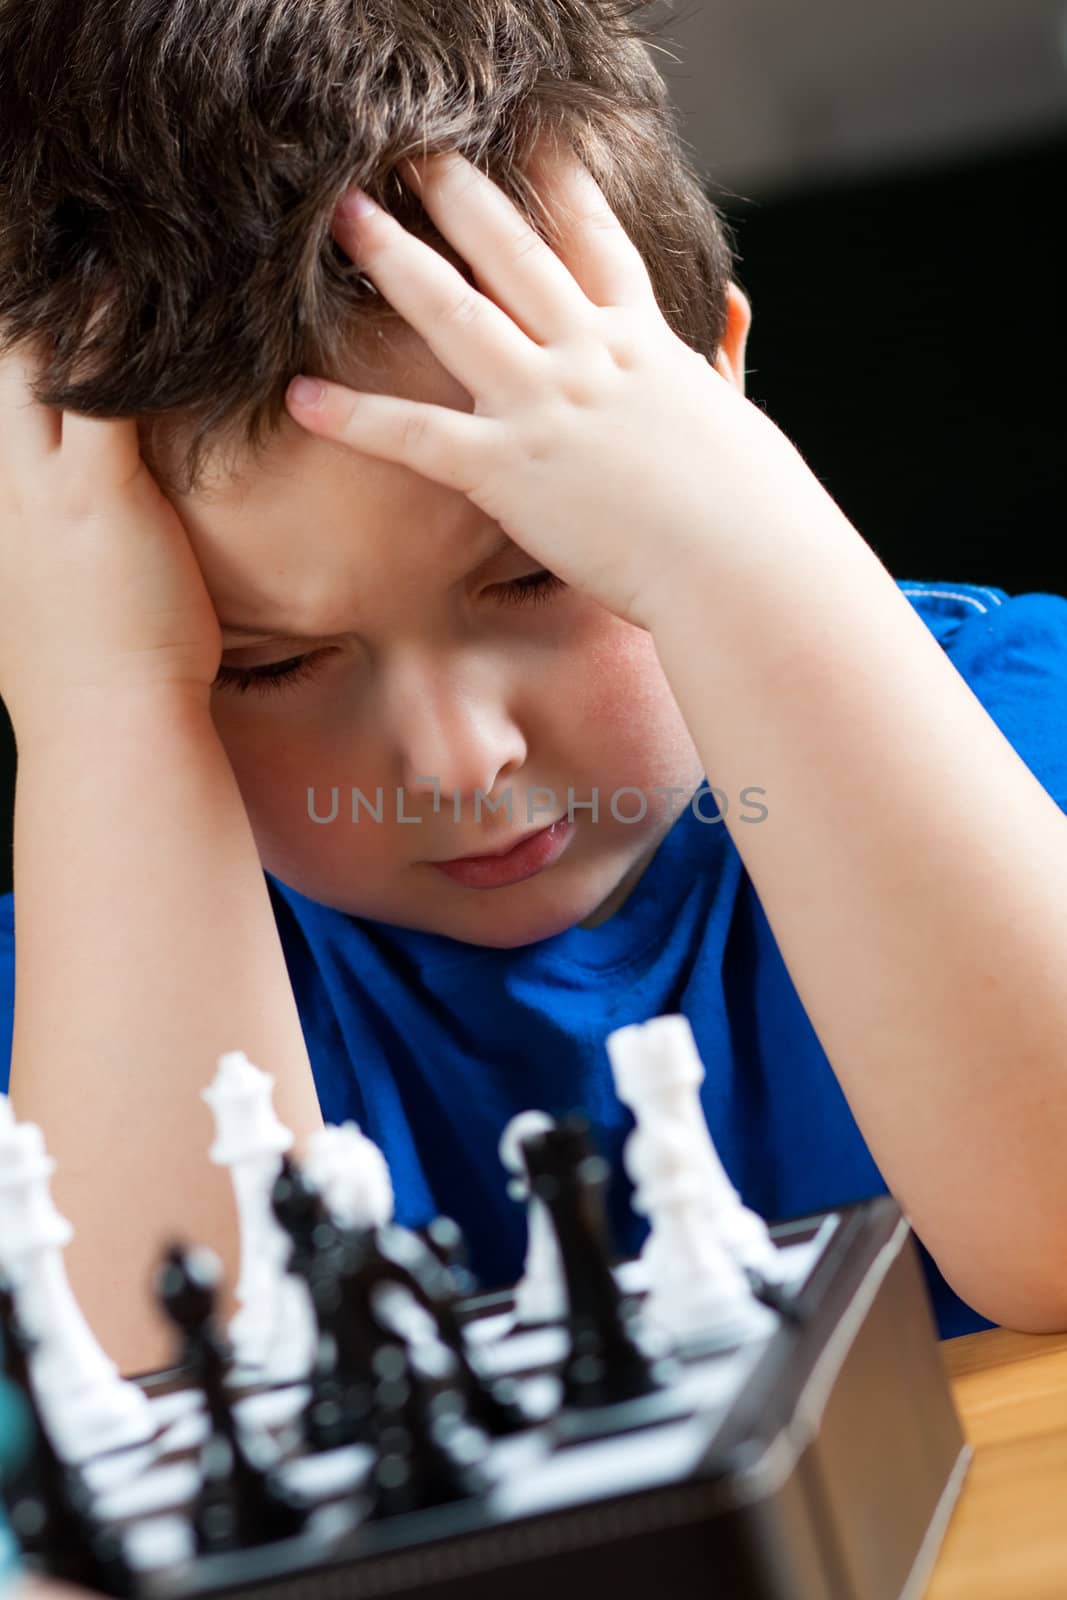 Cute little boy playing chess